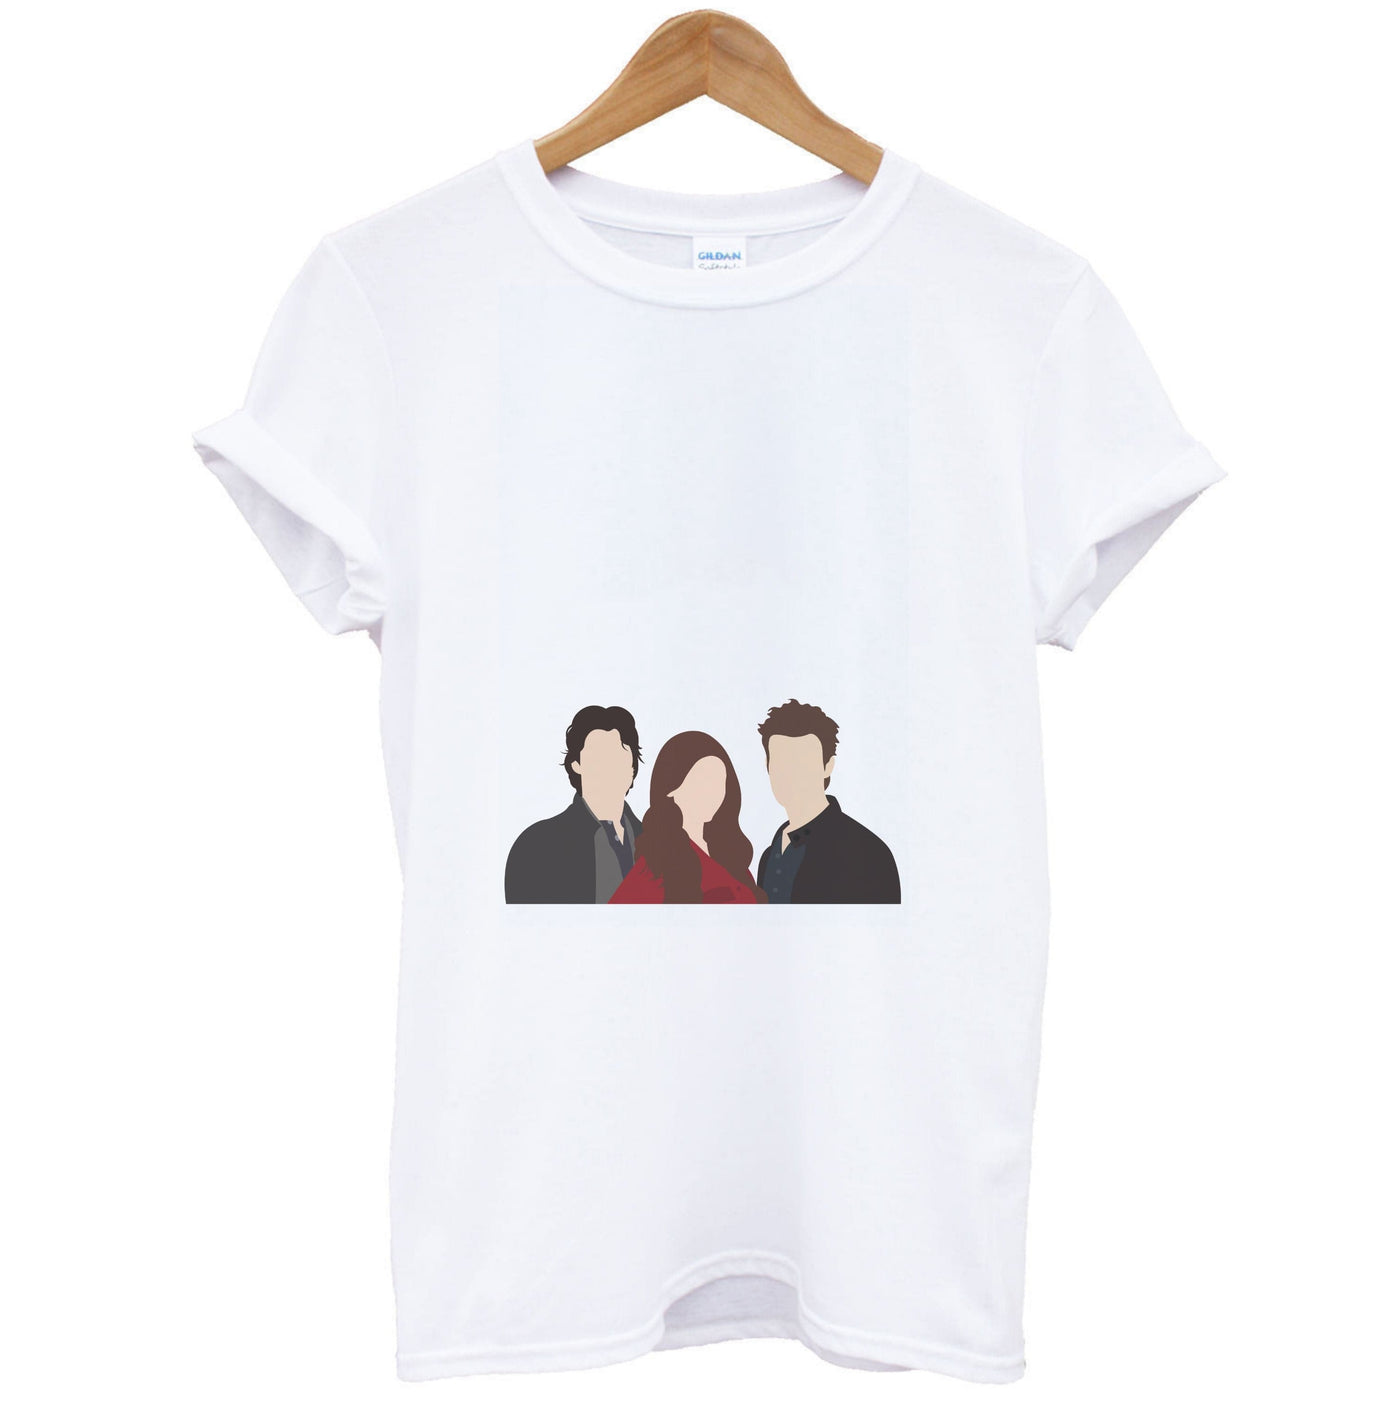 Elena, Damon And Stefan - Vampire Diaries T-Shirt